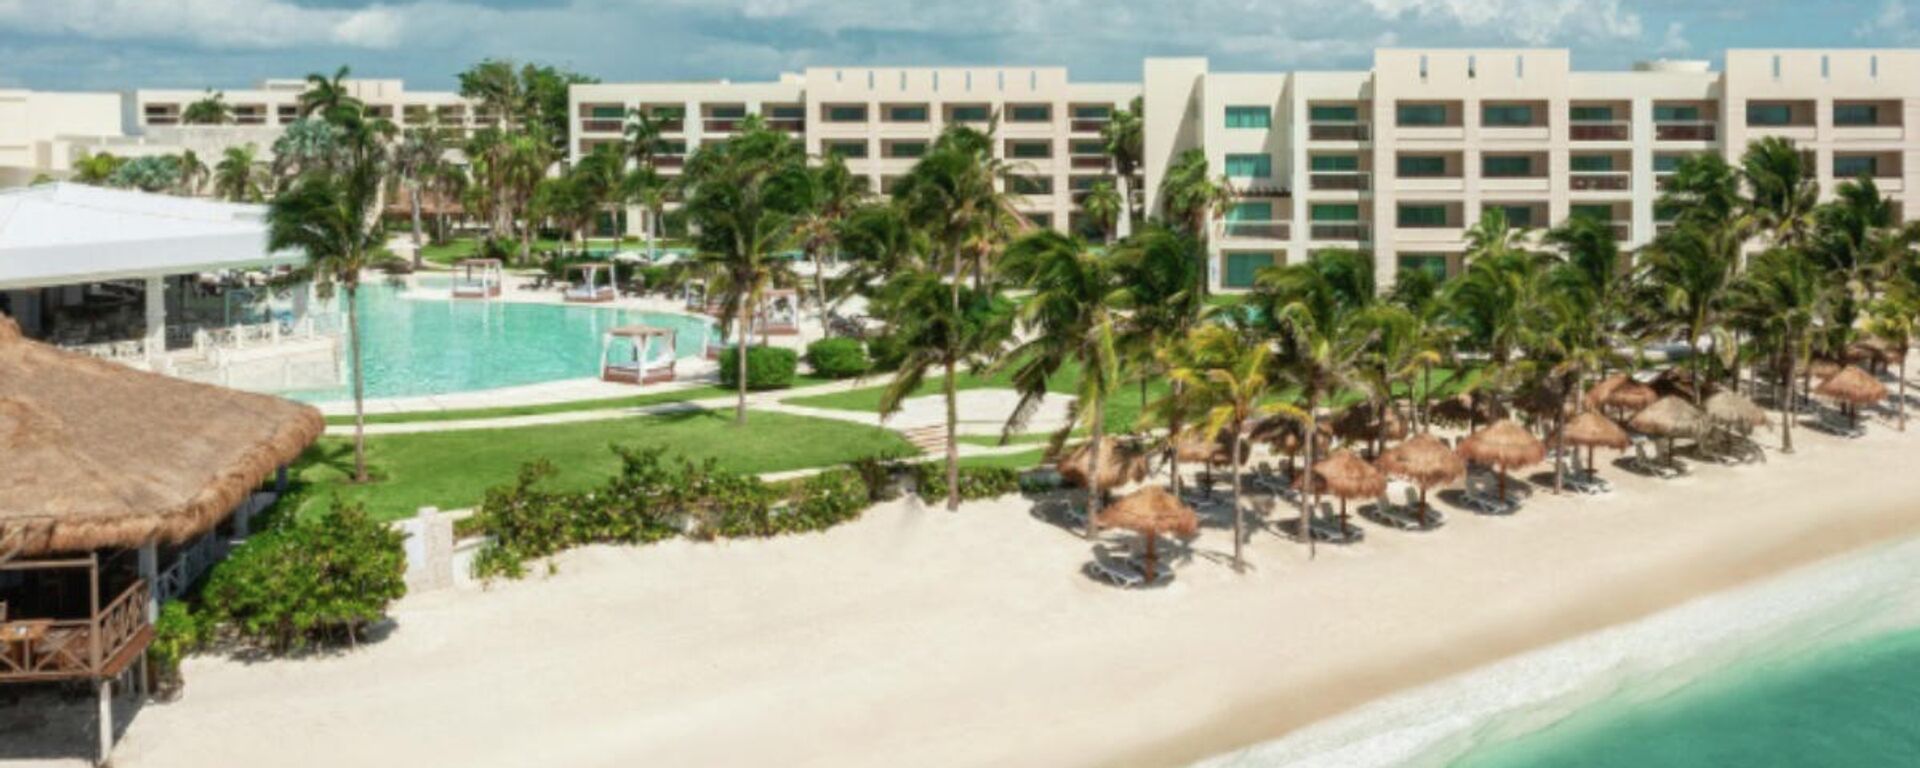 Hyatt Ziva Riviera Cancun Resort - Sputnik Mundo, 1920, 04.11.2021